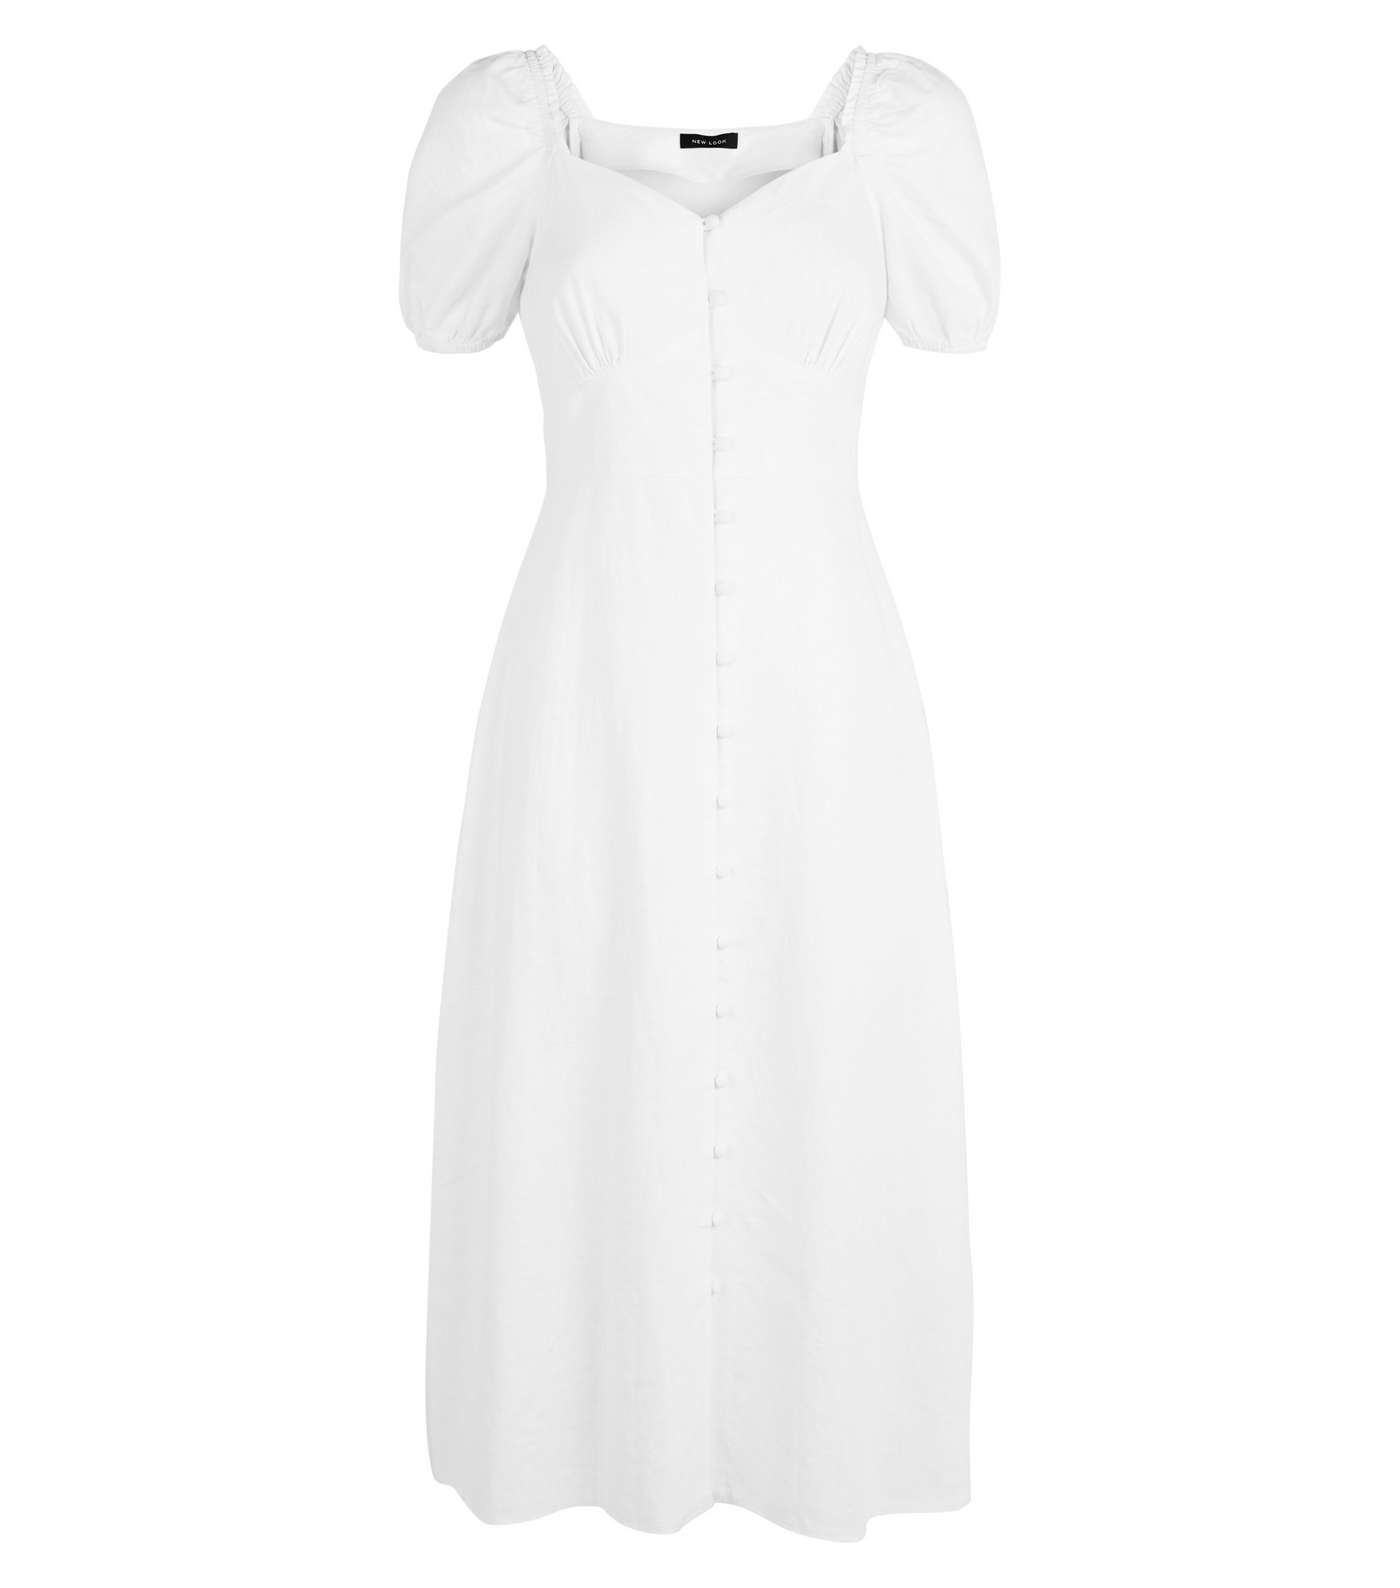 White Linen Blend Button Up Milkmaid Dress Image 4